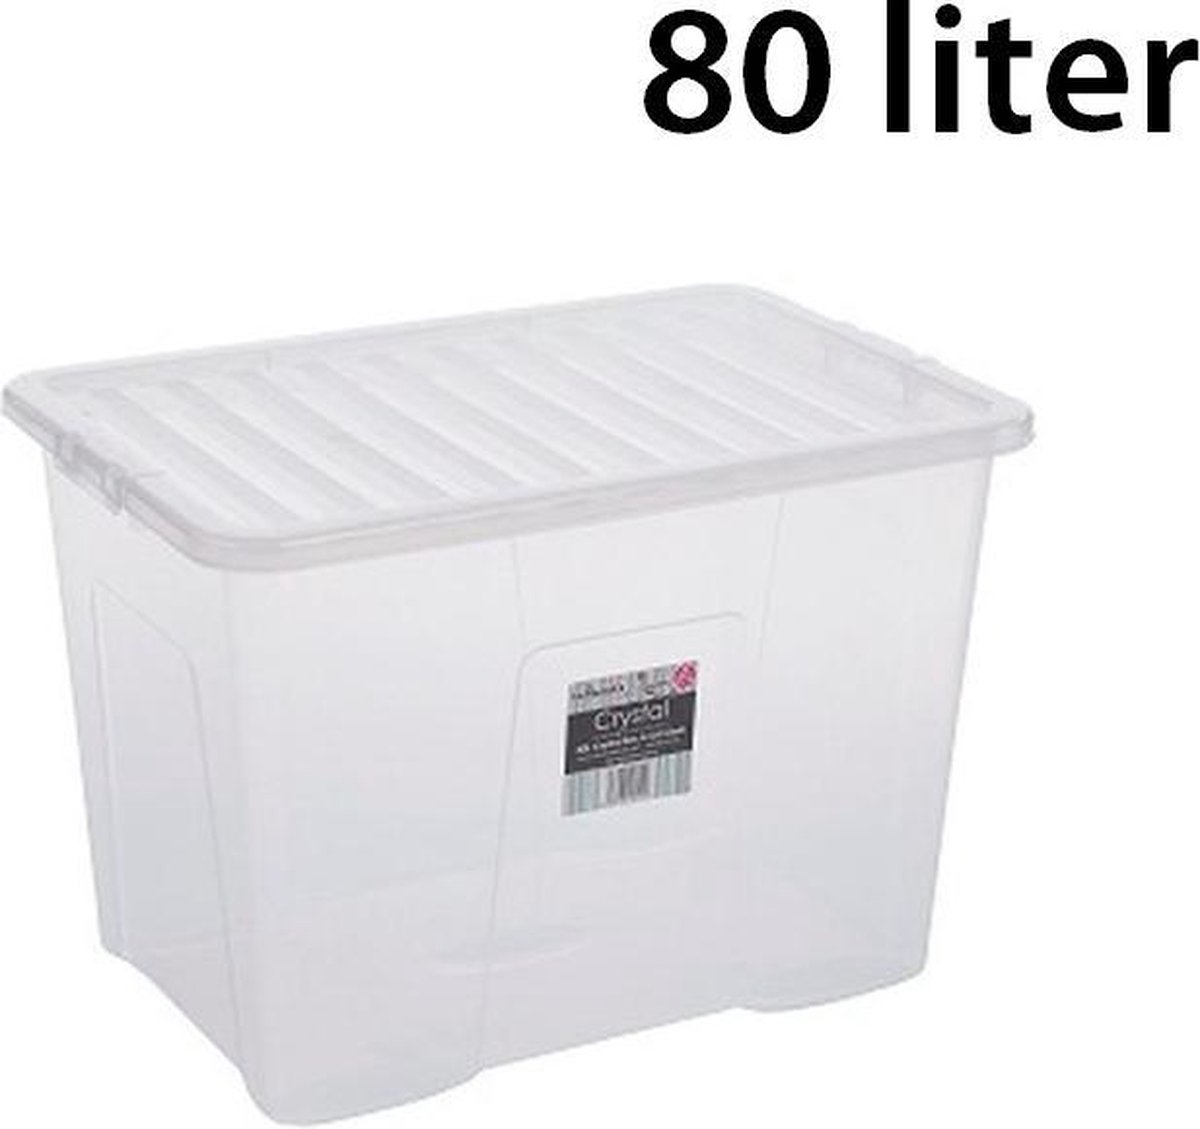 Kunststof Opbergbox 80 liter | 60 x 40 x 42 cm | Transparant met deksel |  bol.com